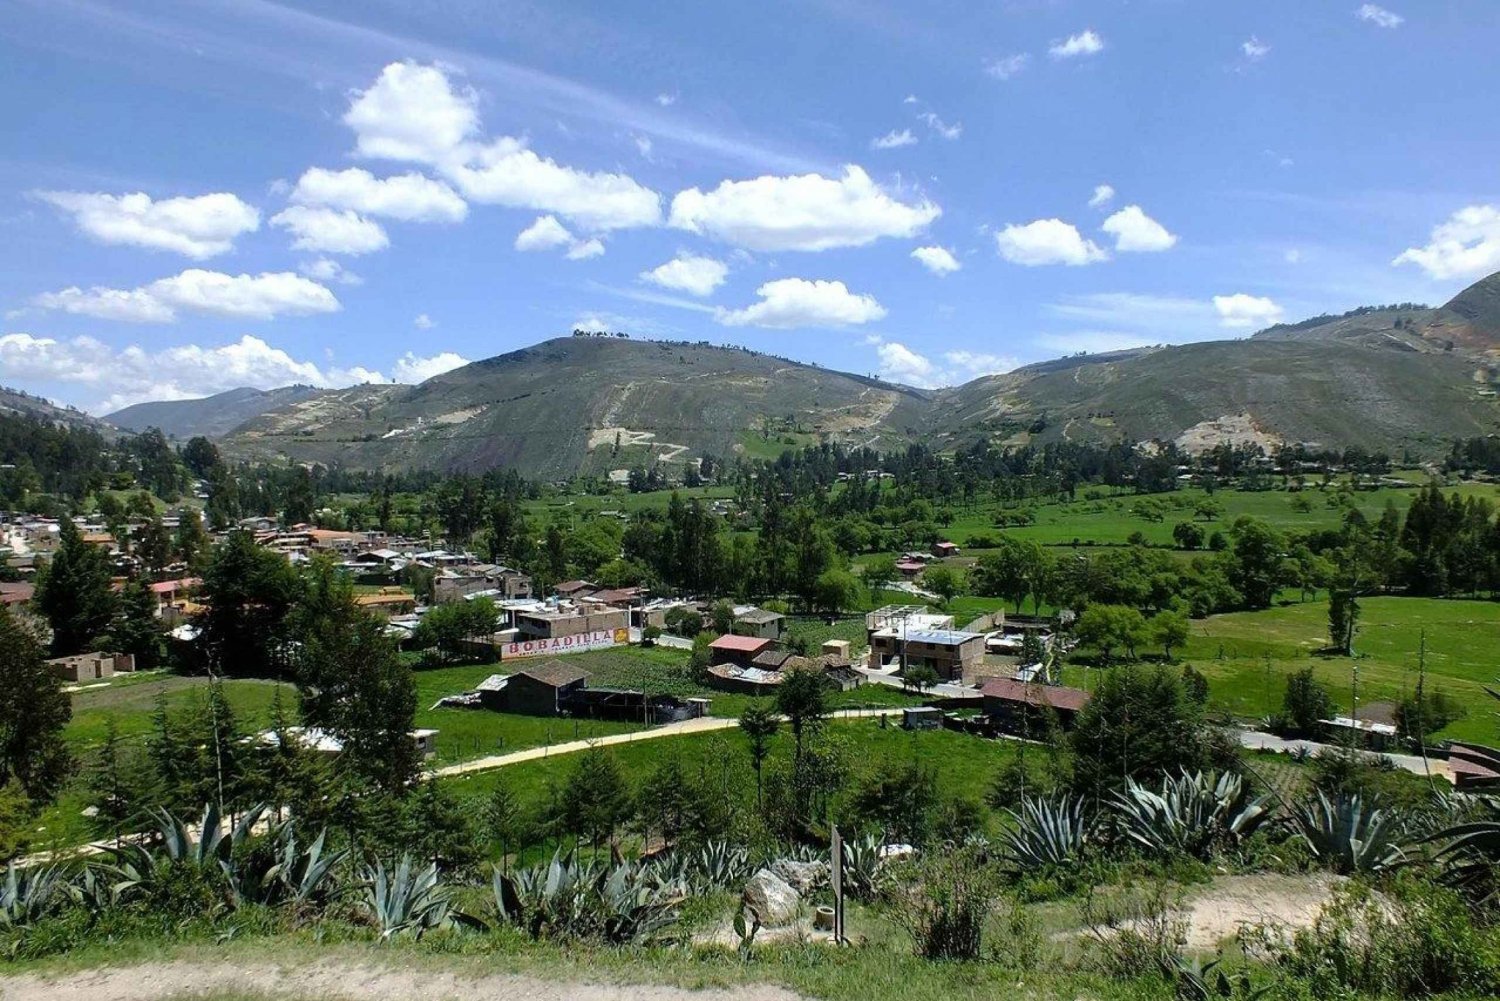 || Tour of the Cajamarca Valley - San Nicolás lagoon ||